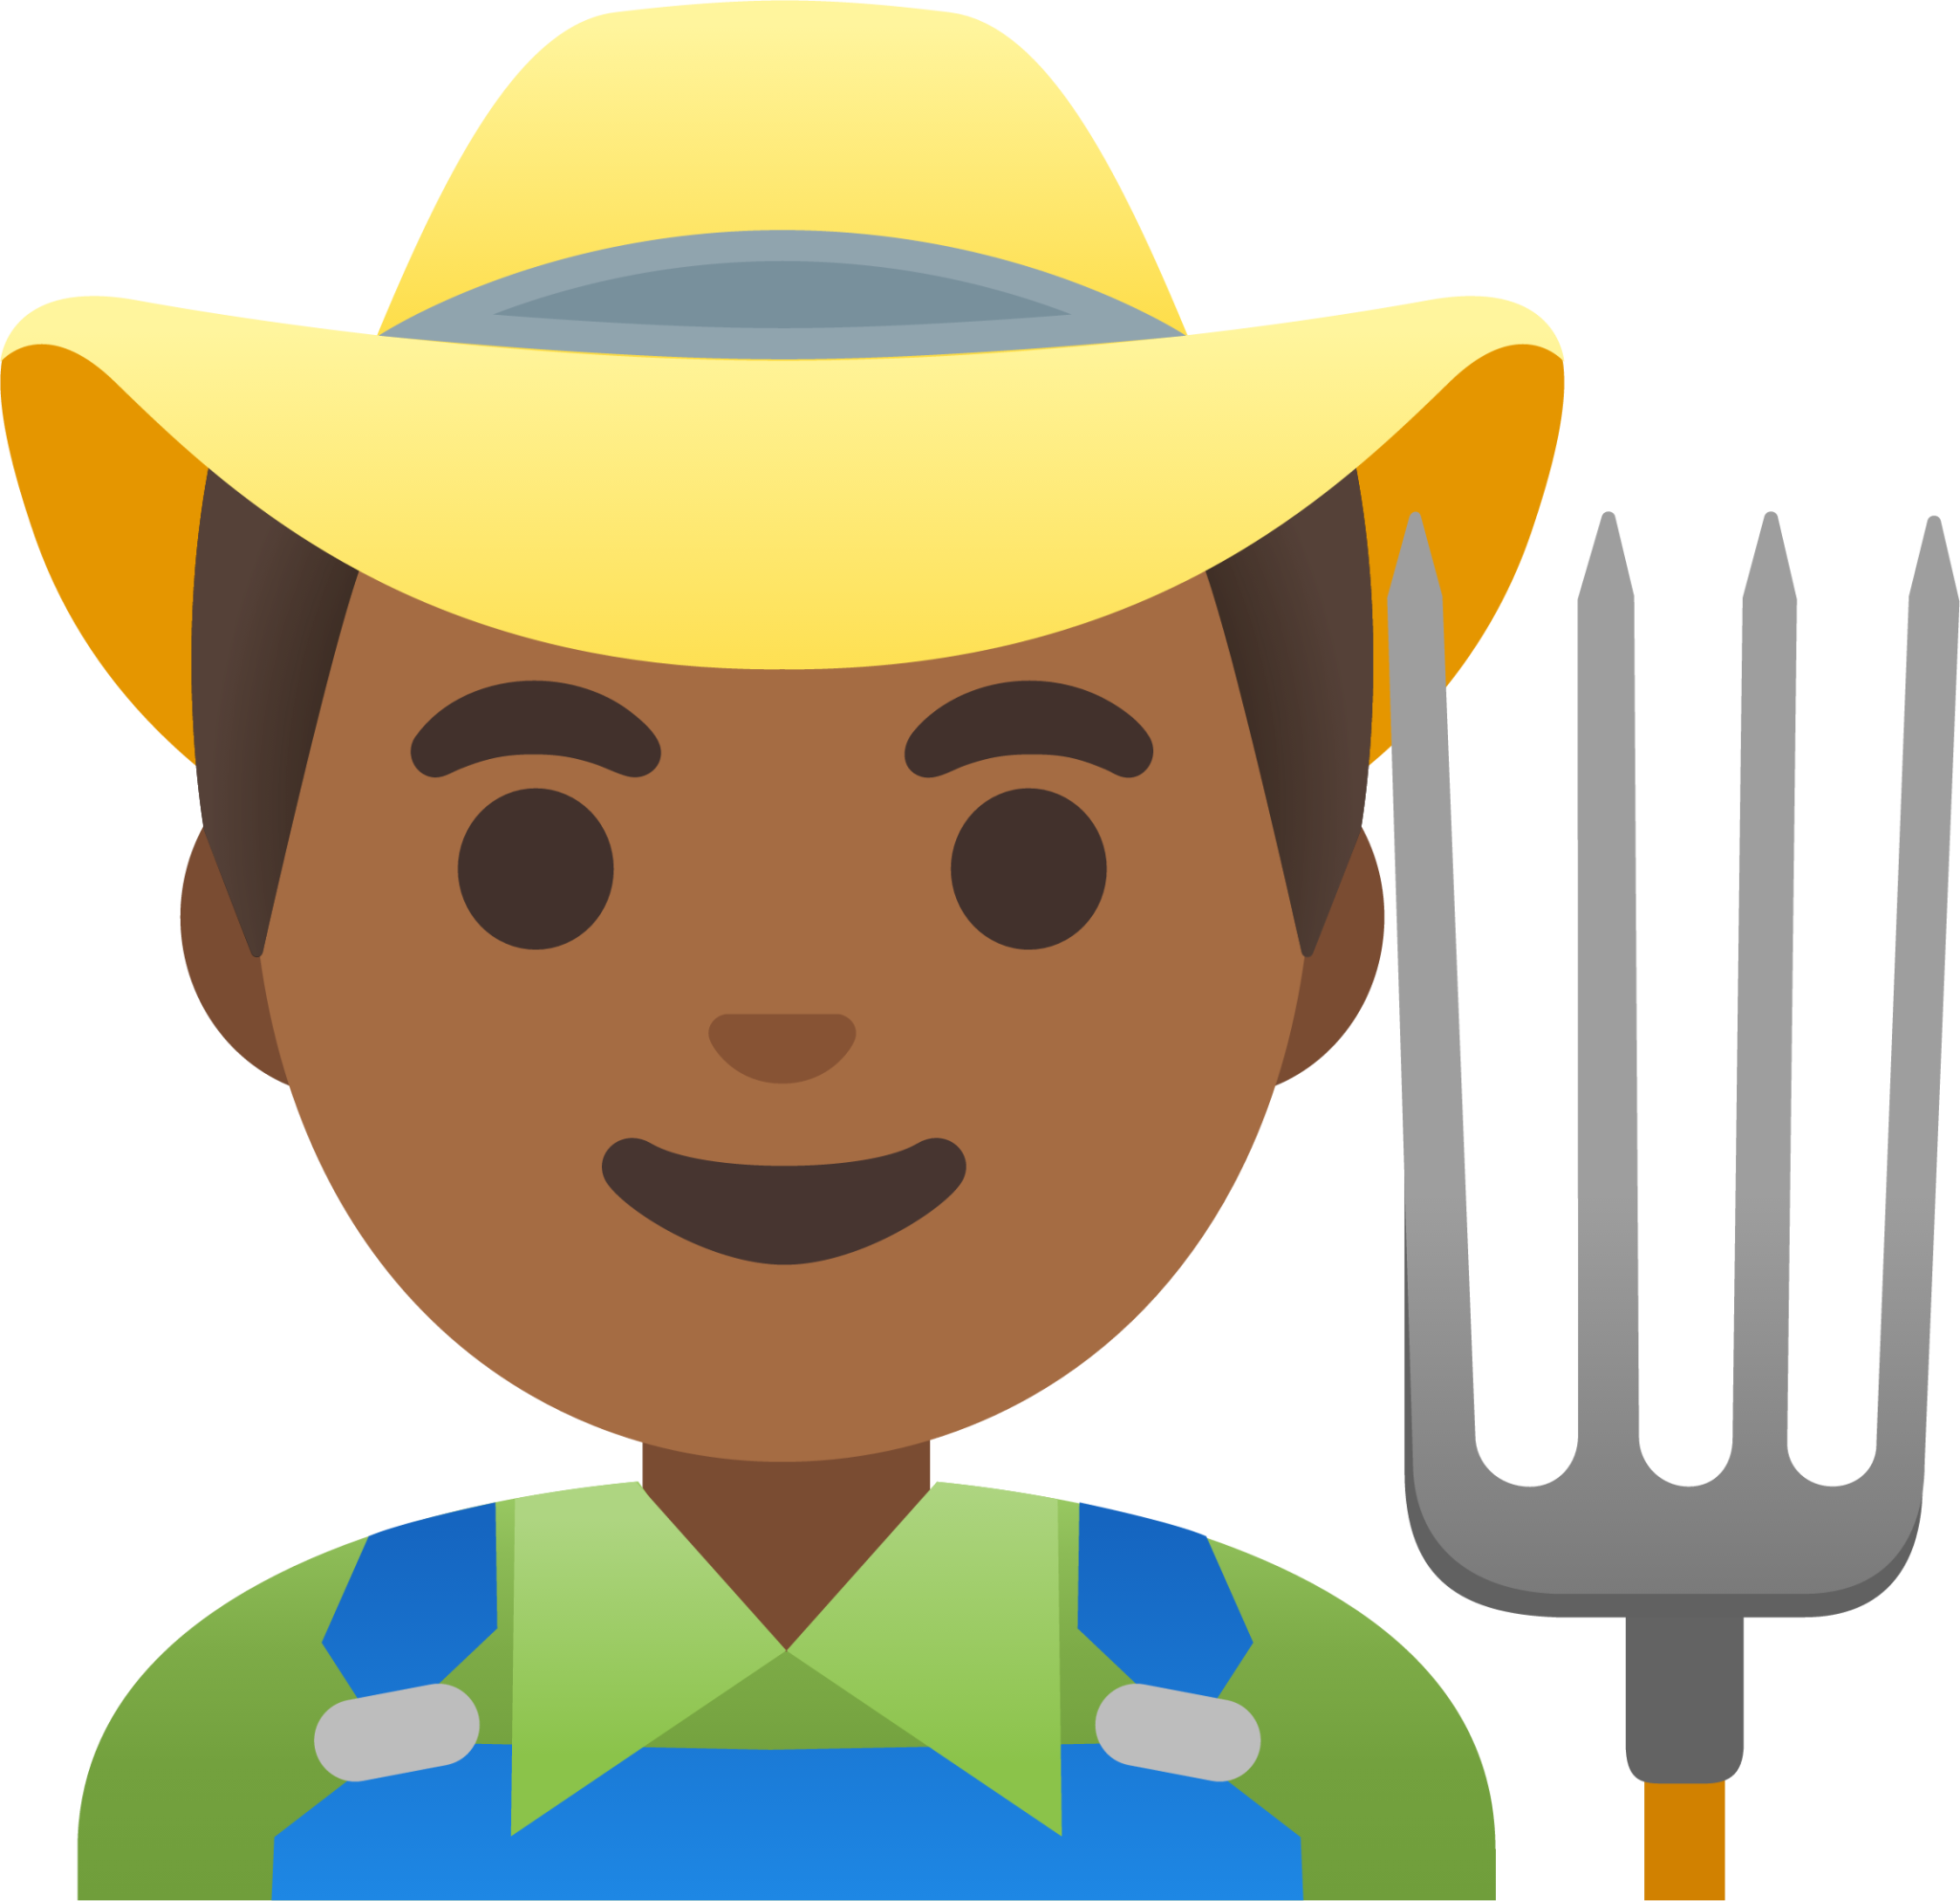 man farmer: medium-dark skin tone emoji